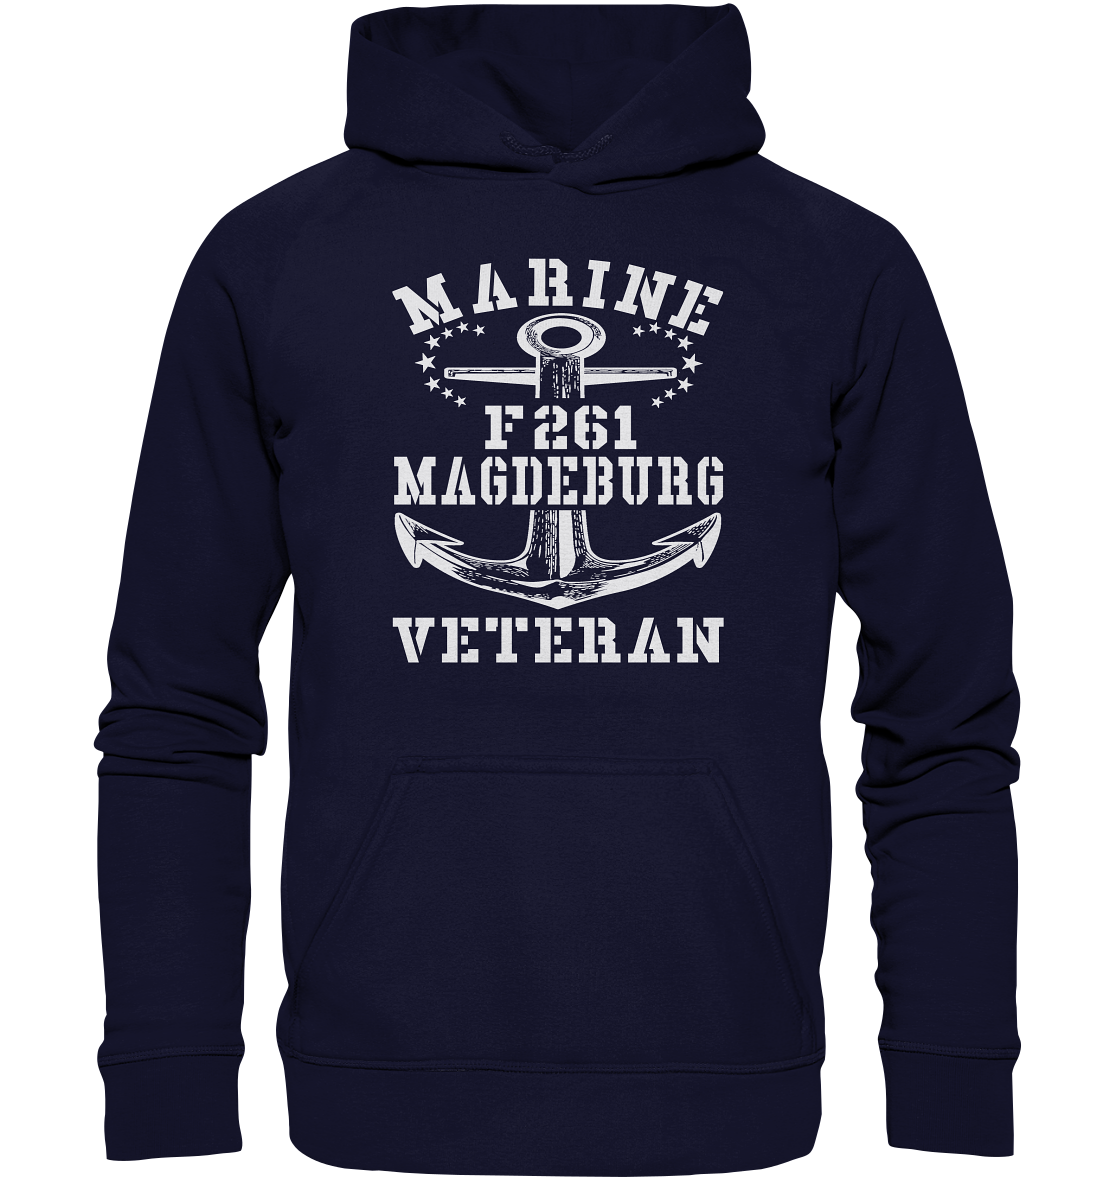 Korvette F261 MAGDEBURG Marine Veteran - Basic Unisex Hoodie